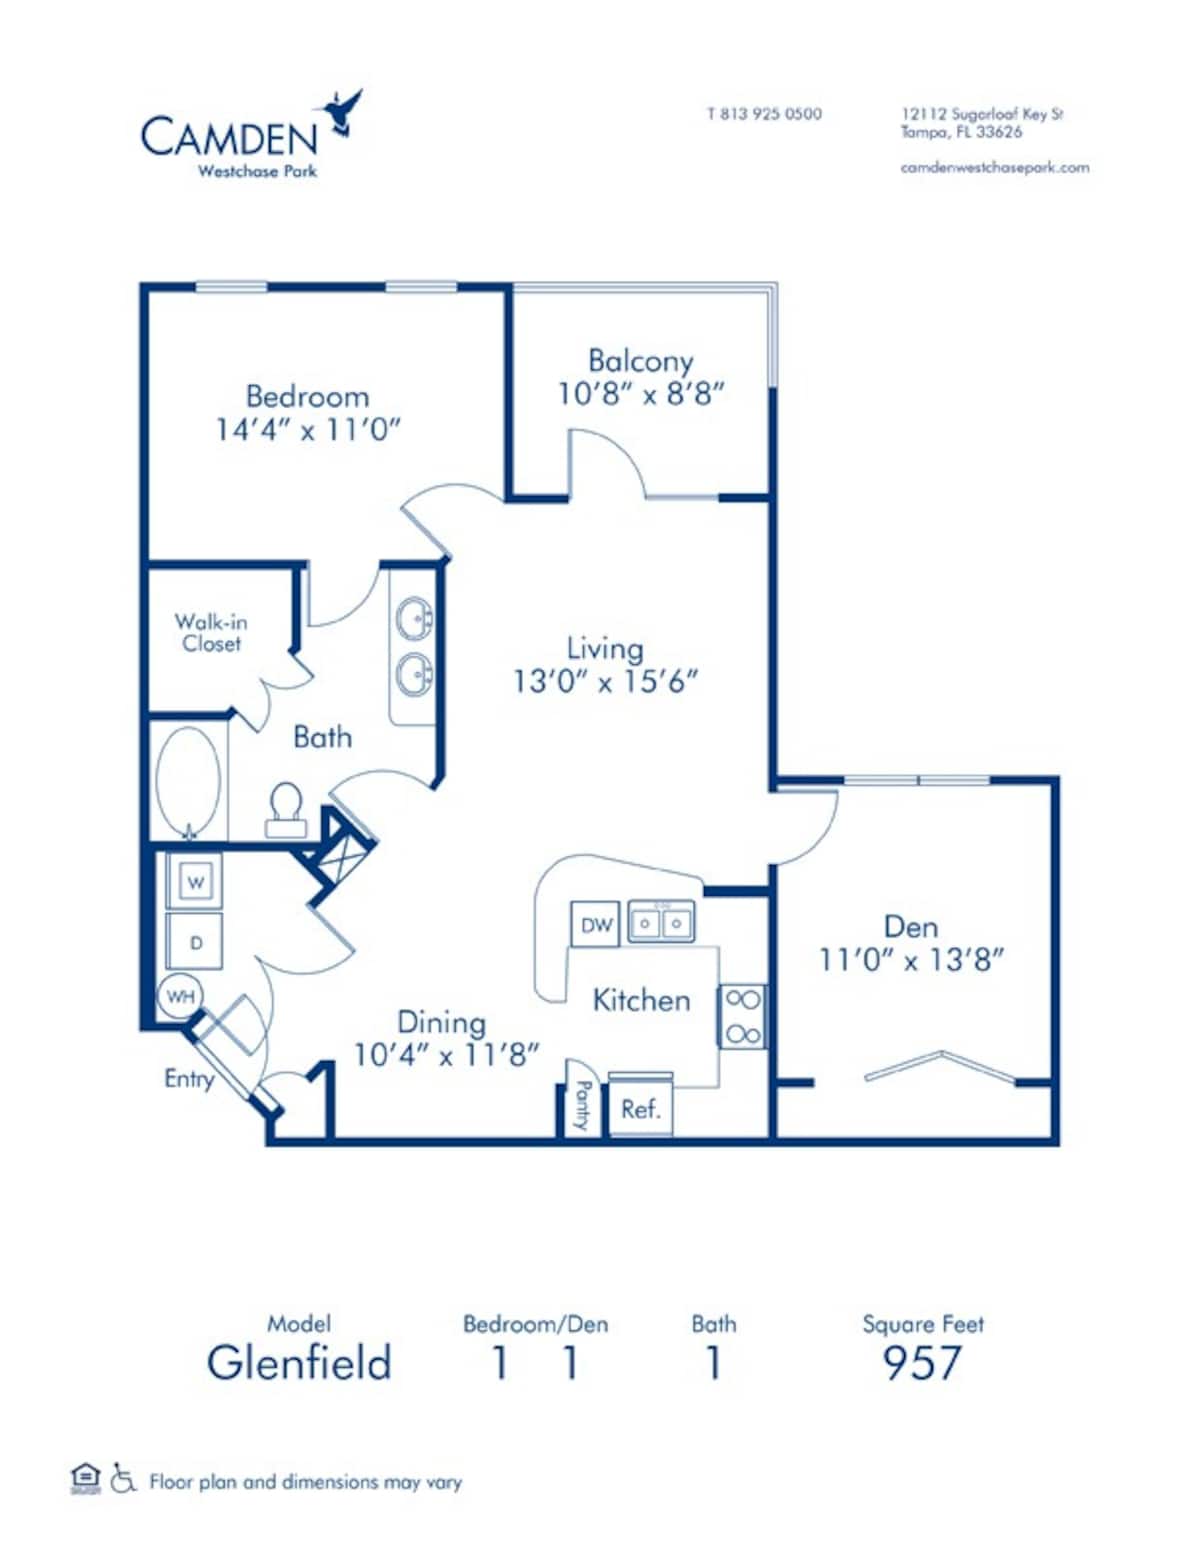 Floorplan diagram for Glenfield, showing 1 bedroom